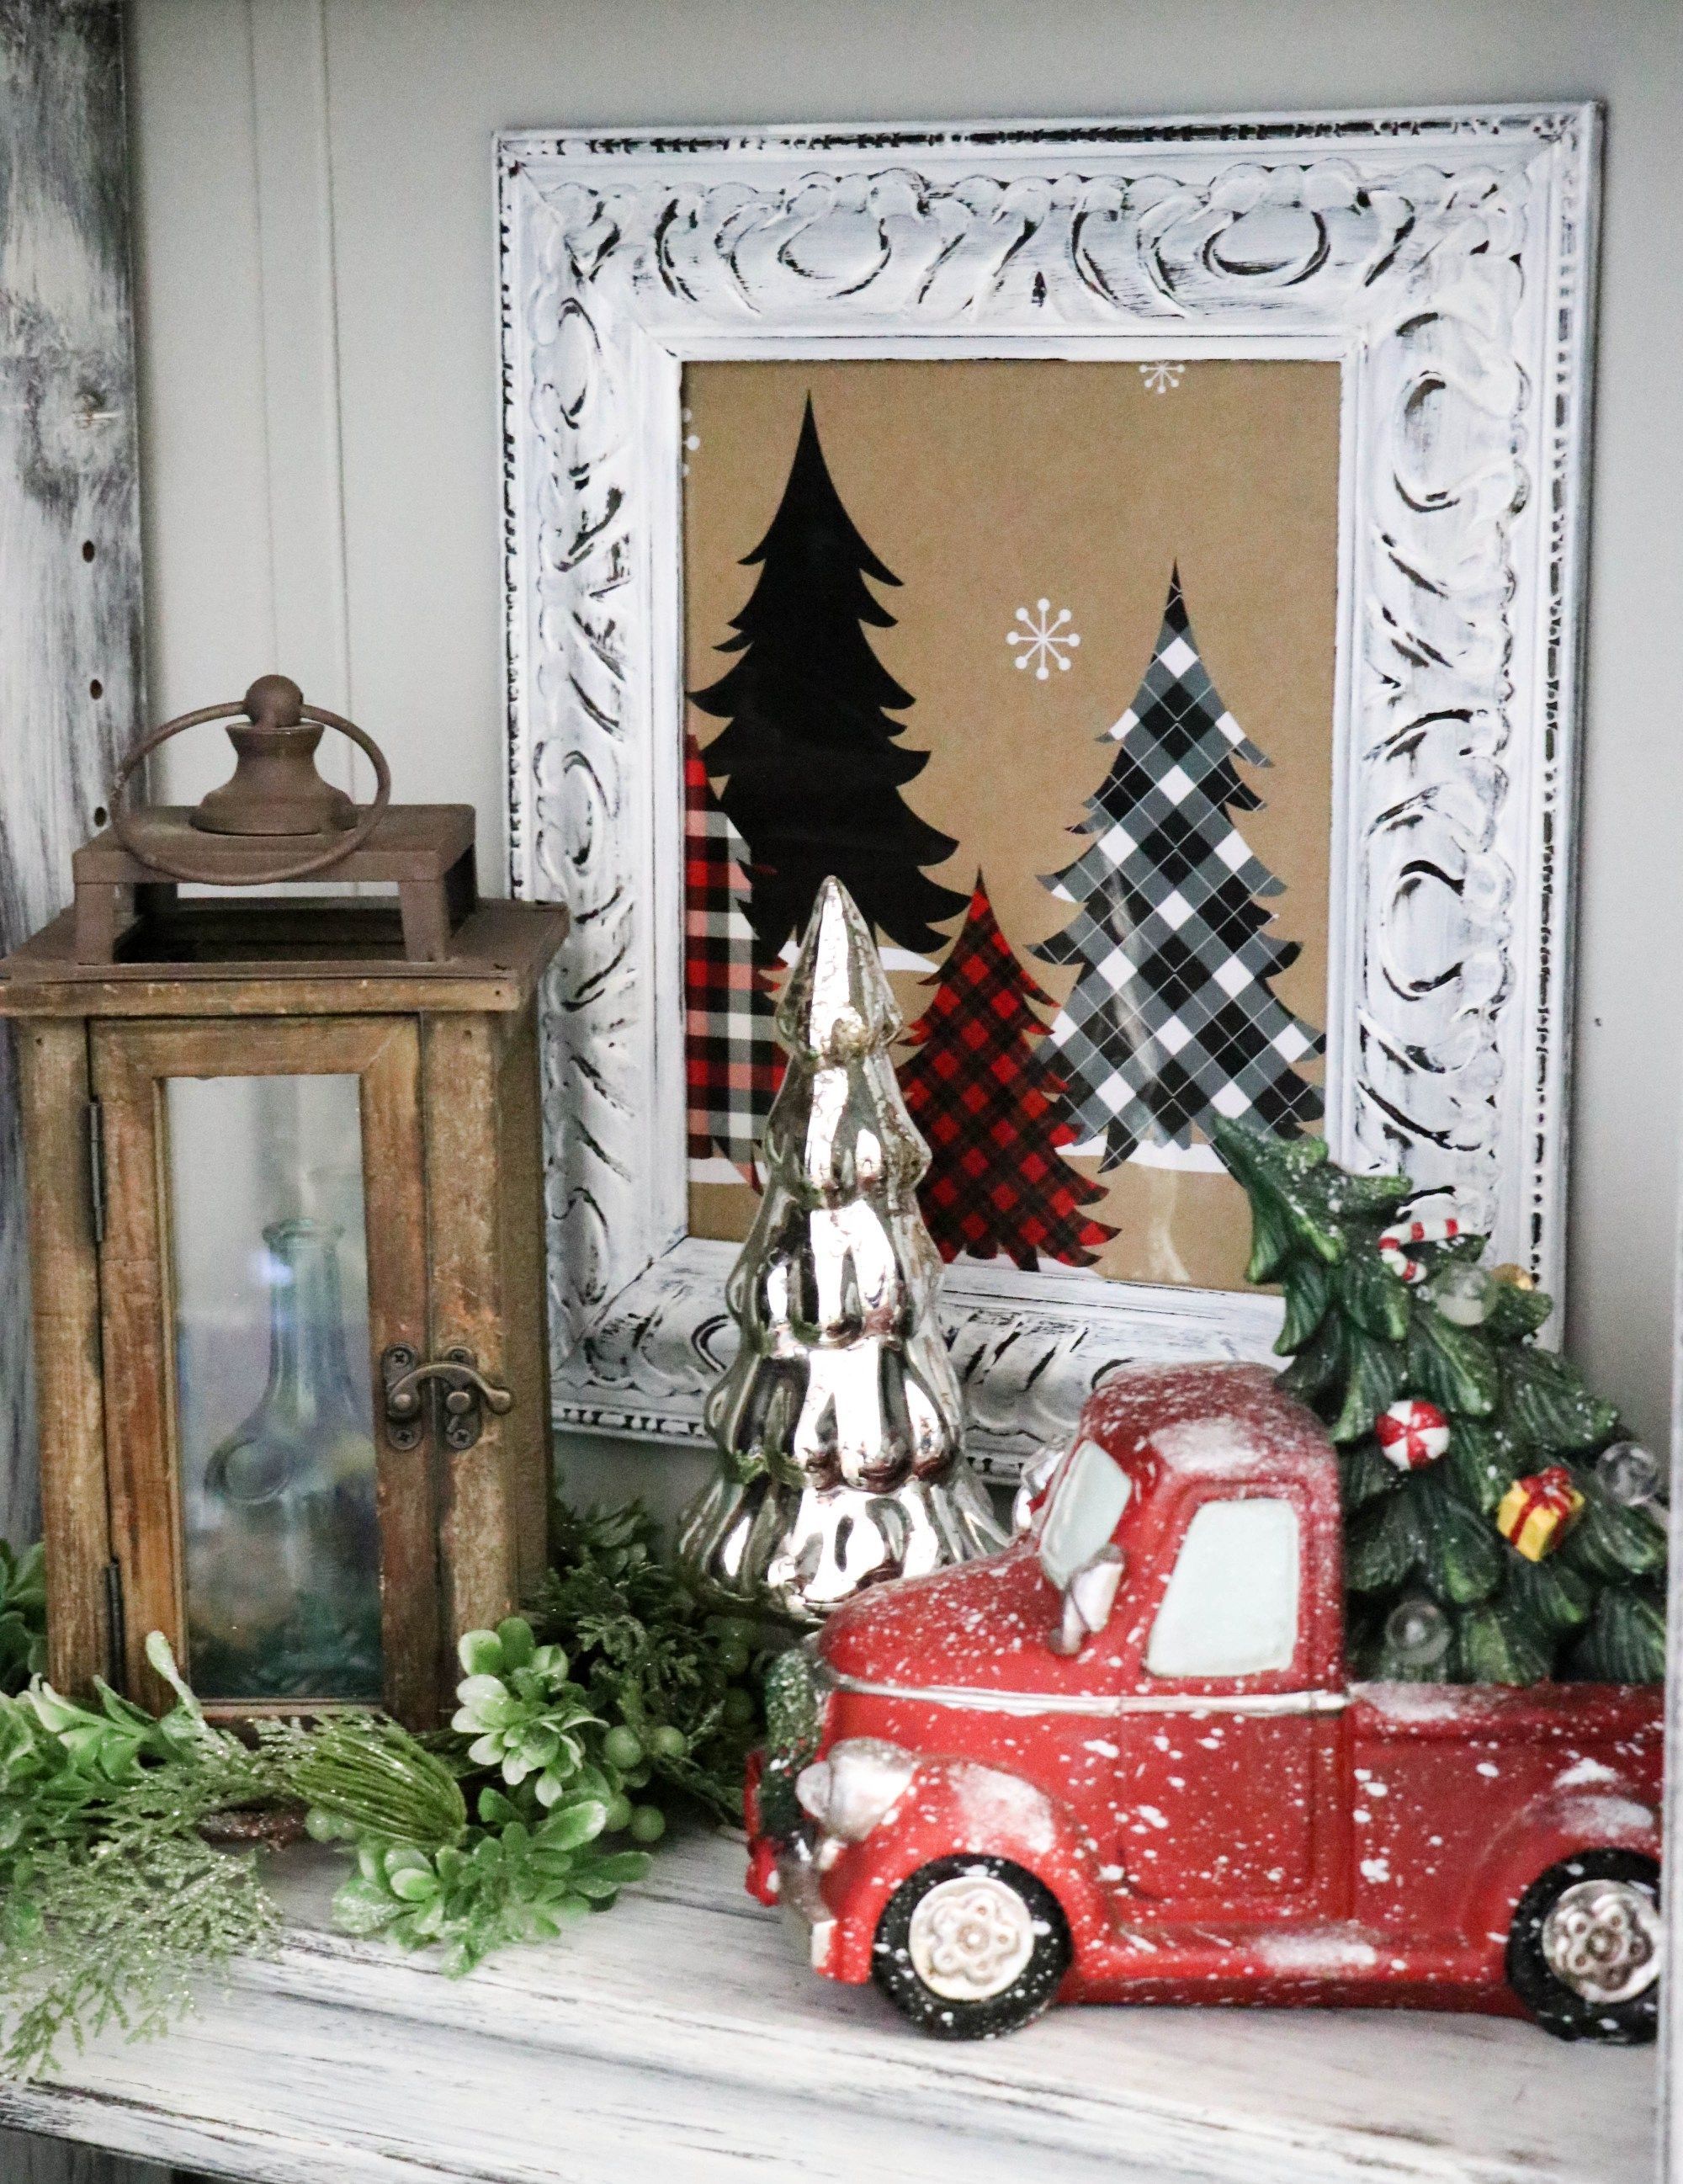 Ornament colorful farmer primitive xmas rustic Christmas decor